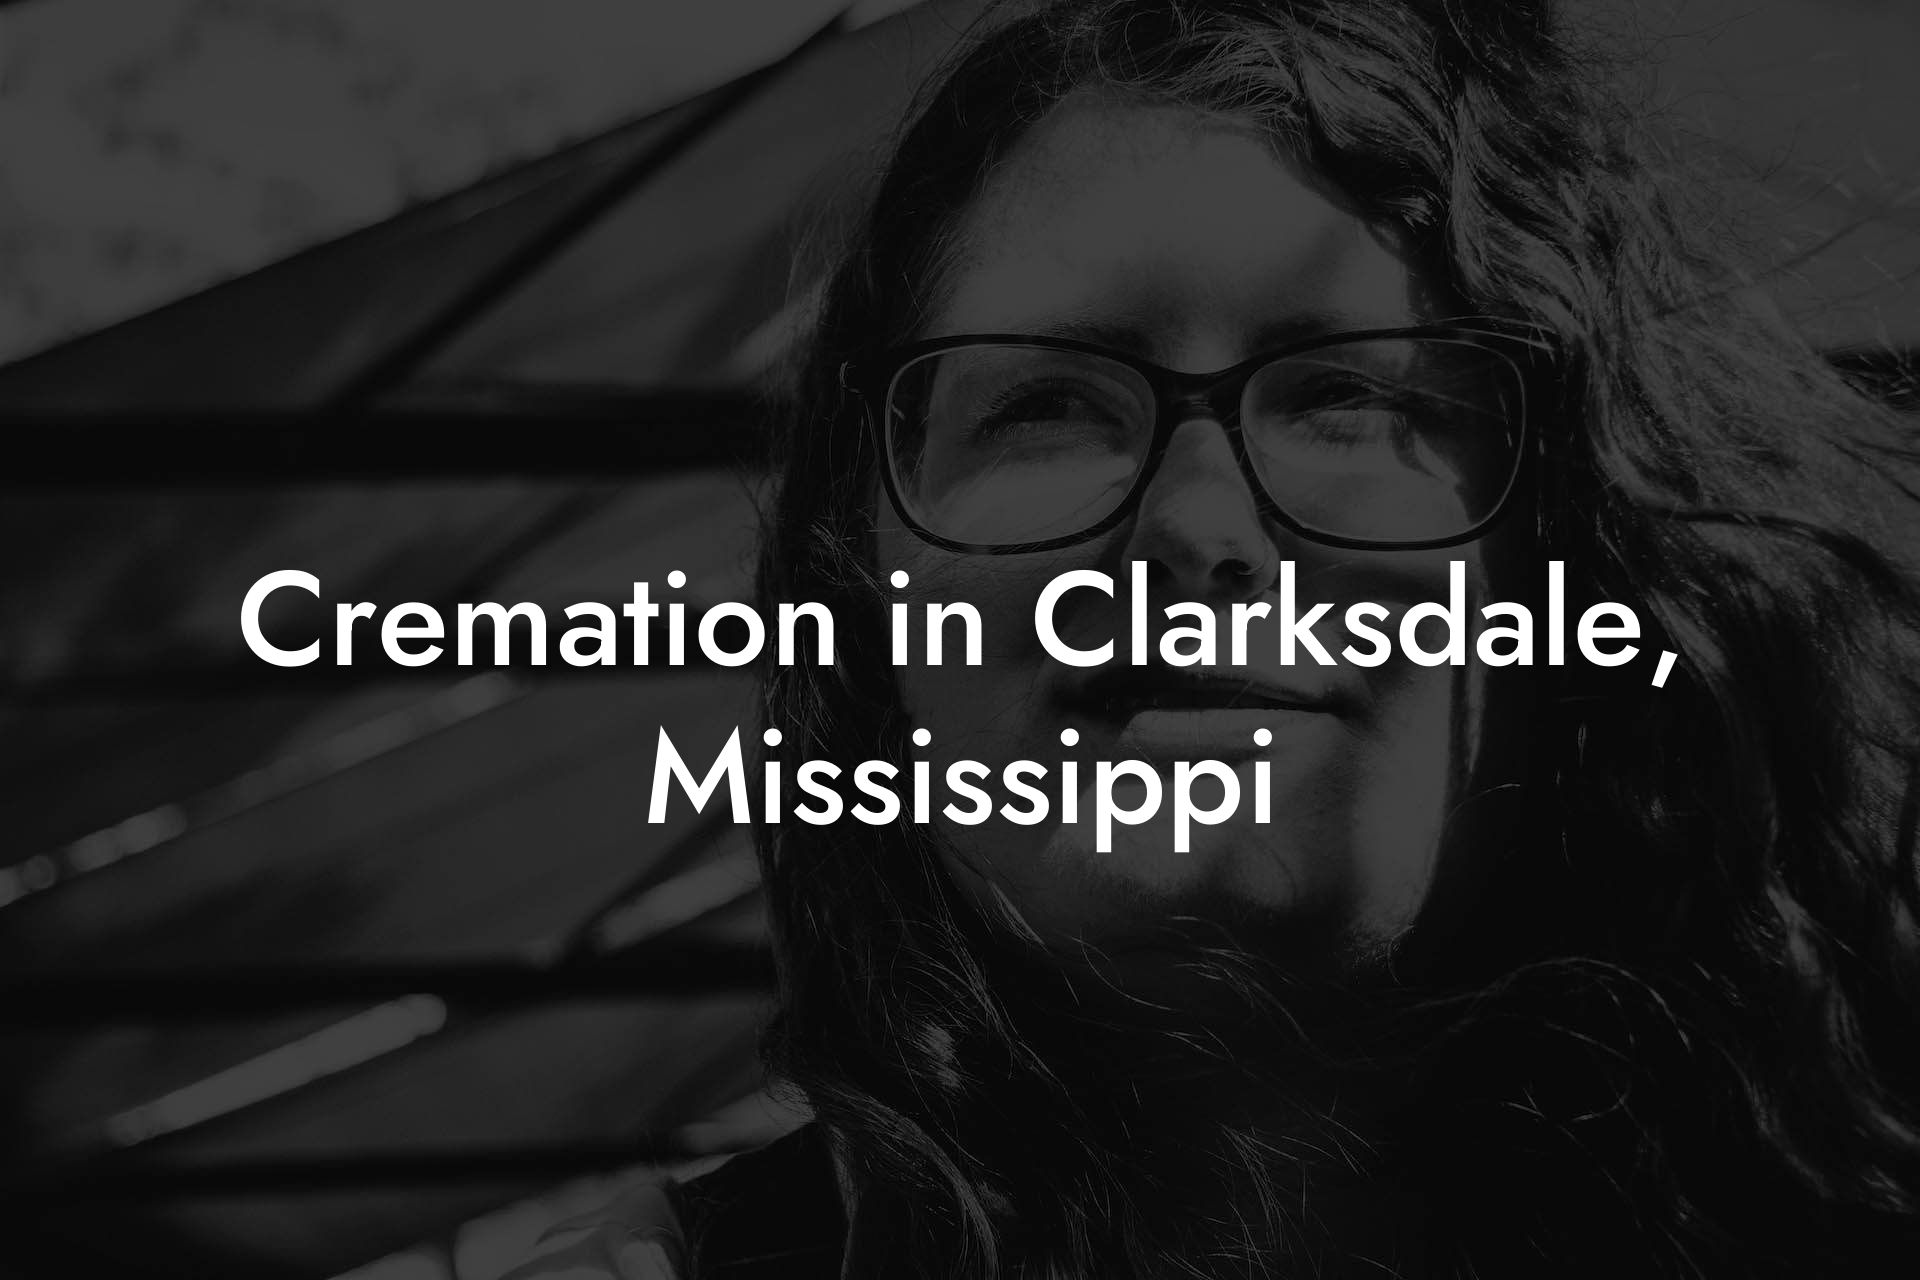 Cremation in Clarksdale, Mississippi